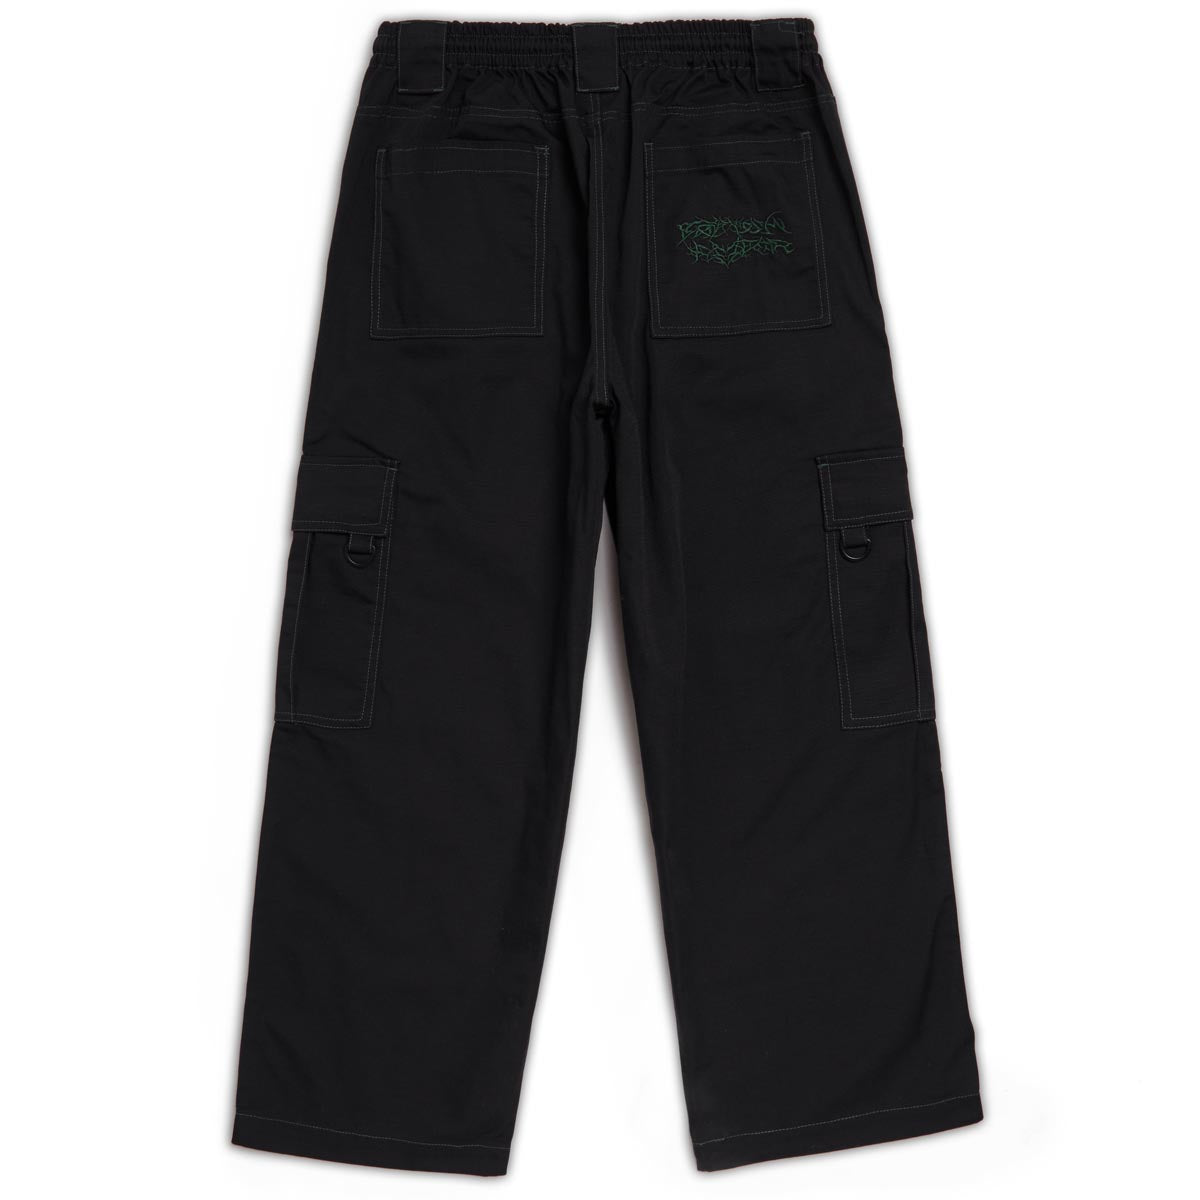 CCS Chandler Ripstop Cargo Pants - Black/Green image 5